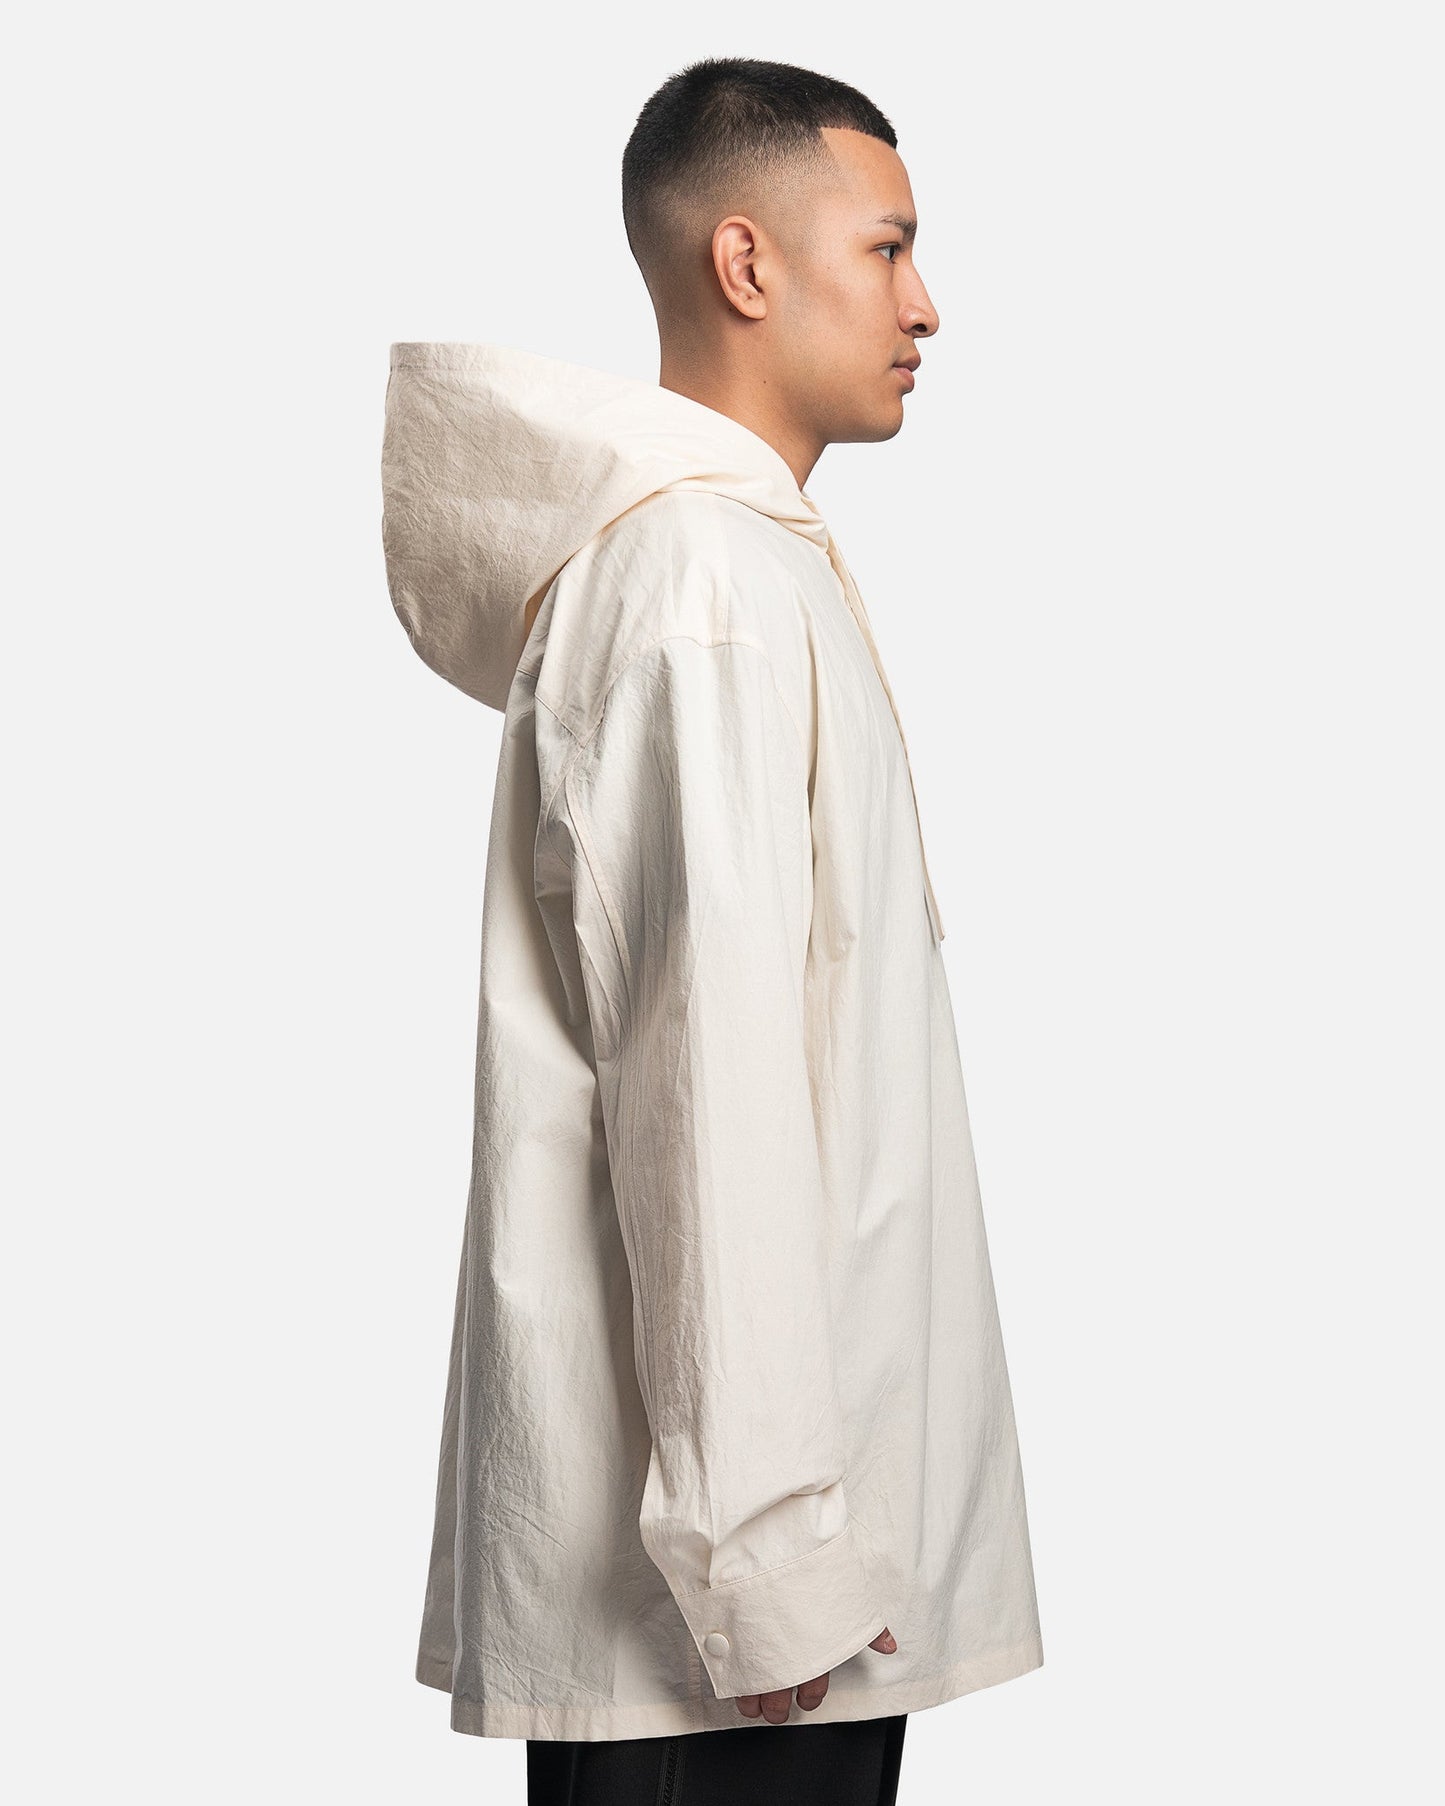 Jil Sander Men's Shirts Compact Washed Organic Cotton Shirt in Natural